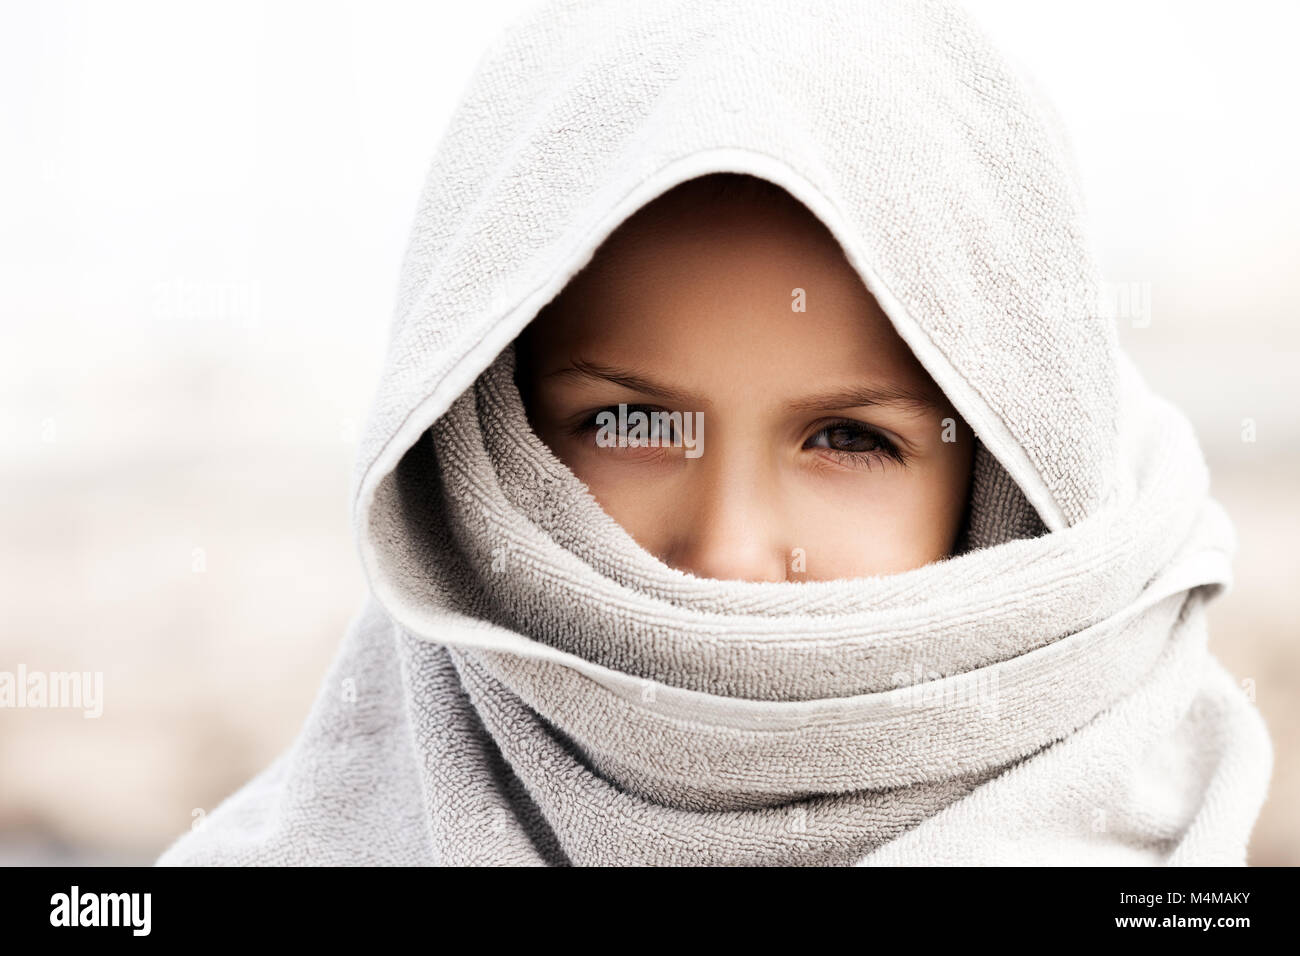 Little child boy wearing arabian burka style clothing Stock Photo